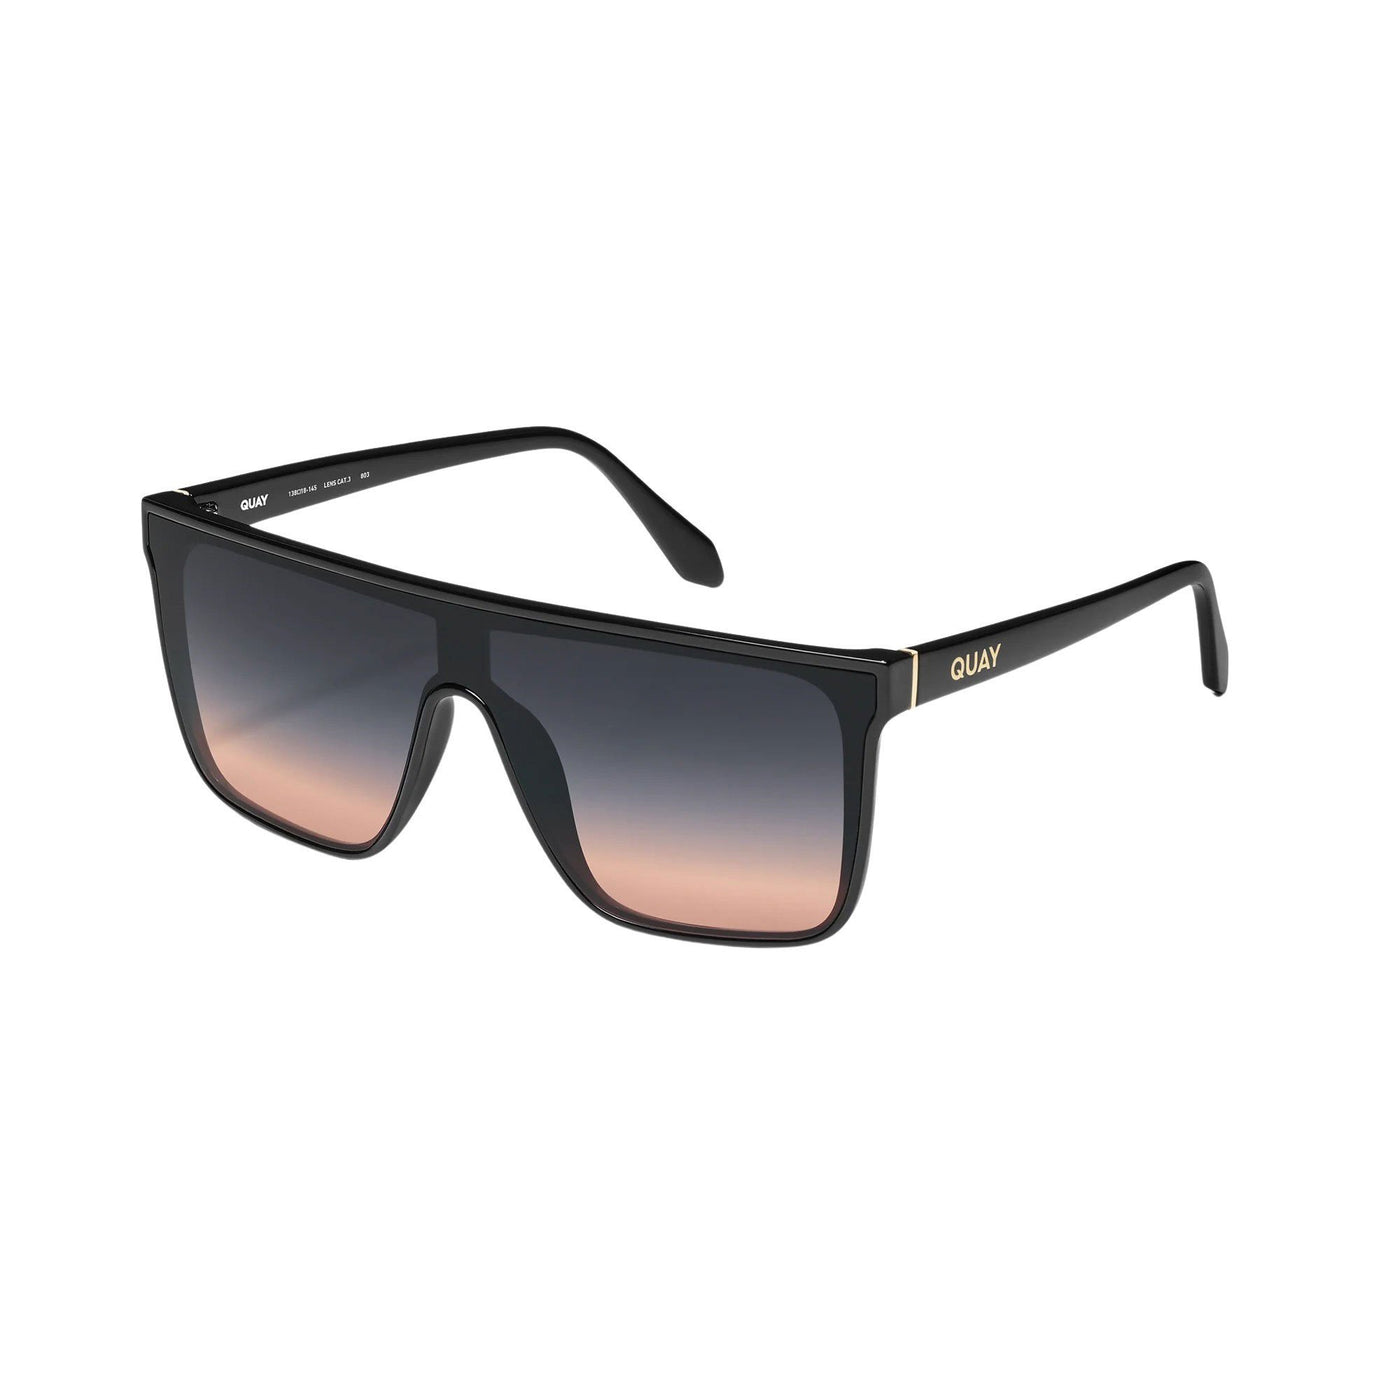 Quay Women's Nightfall Flat Top Shield Sunglasses - Black Frame/Black Fade to Coral Lens - 3/4 angle